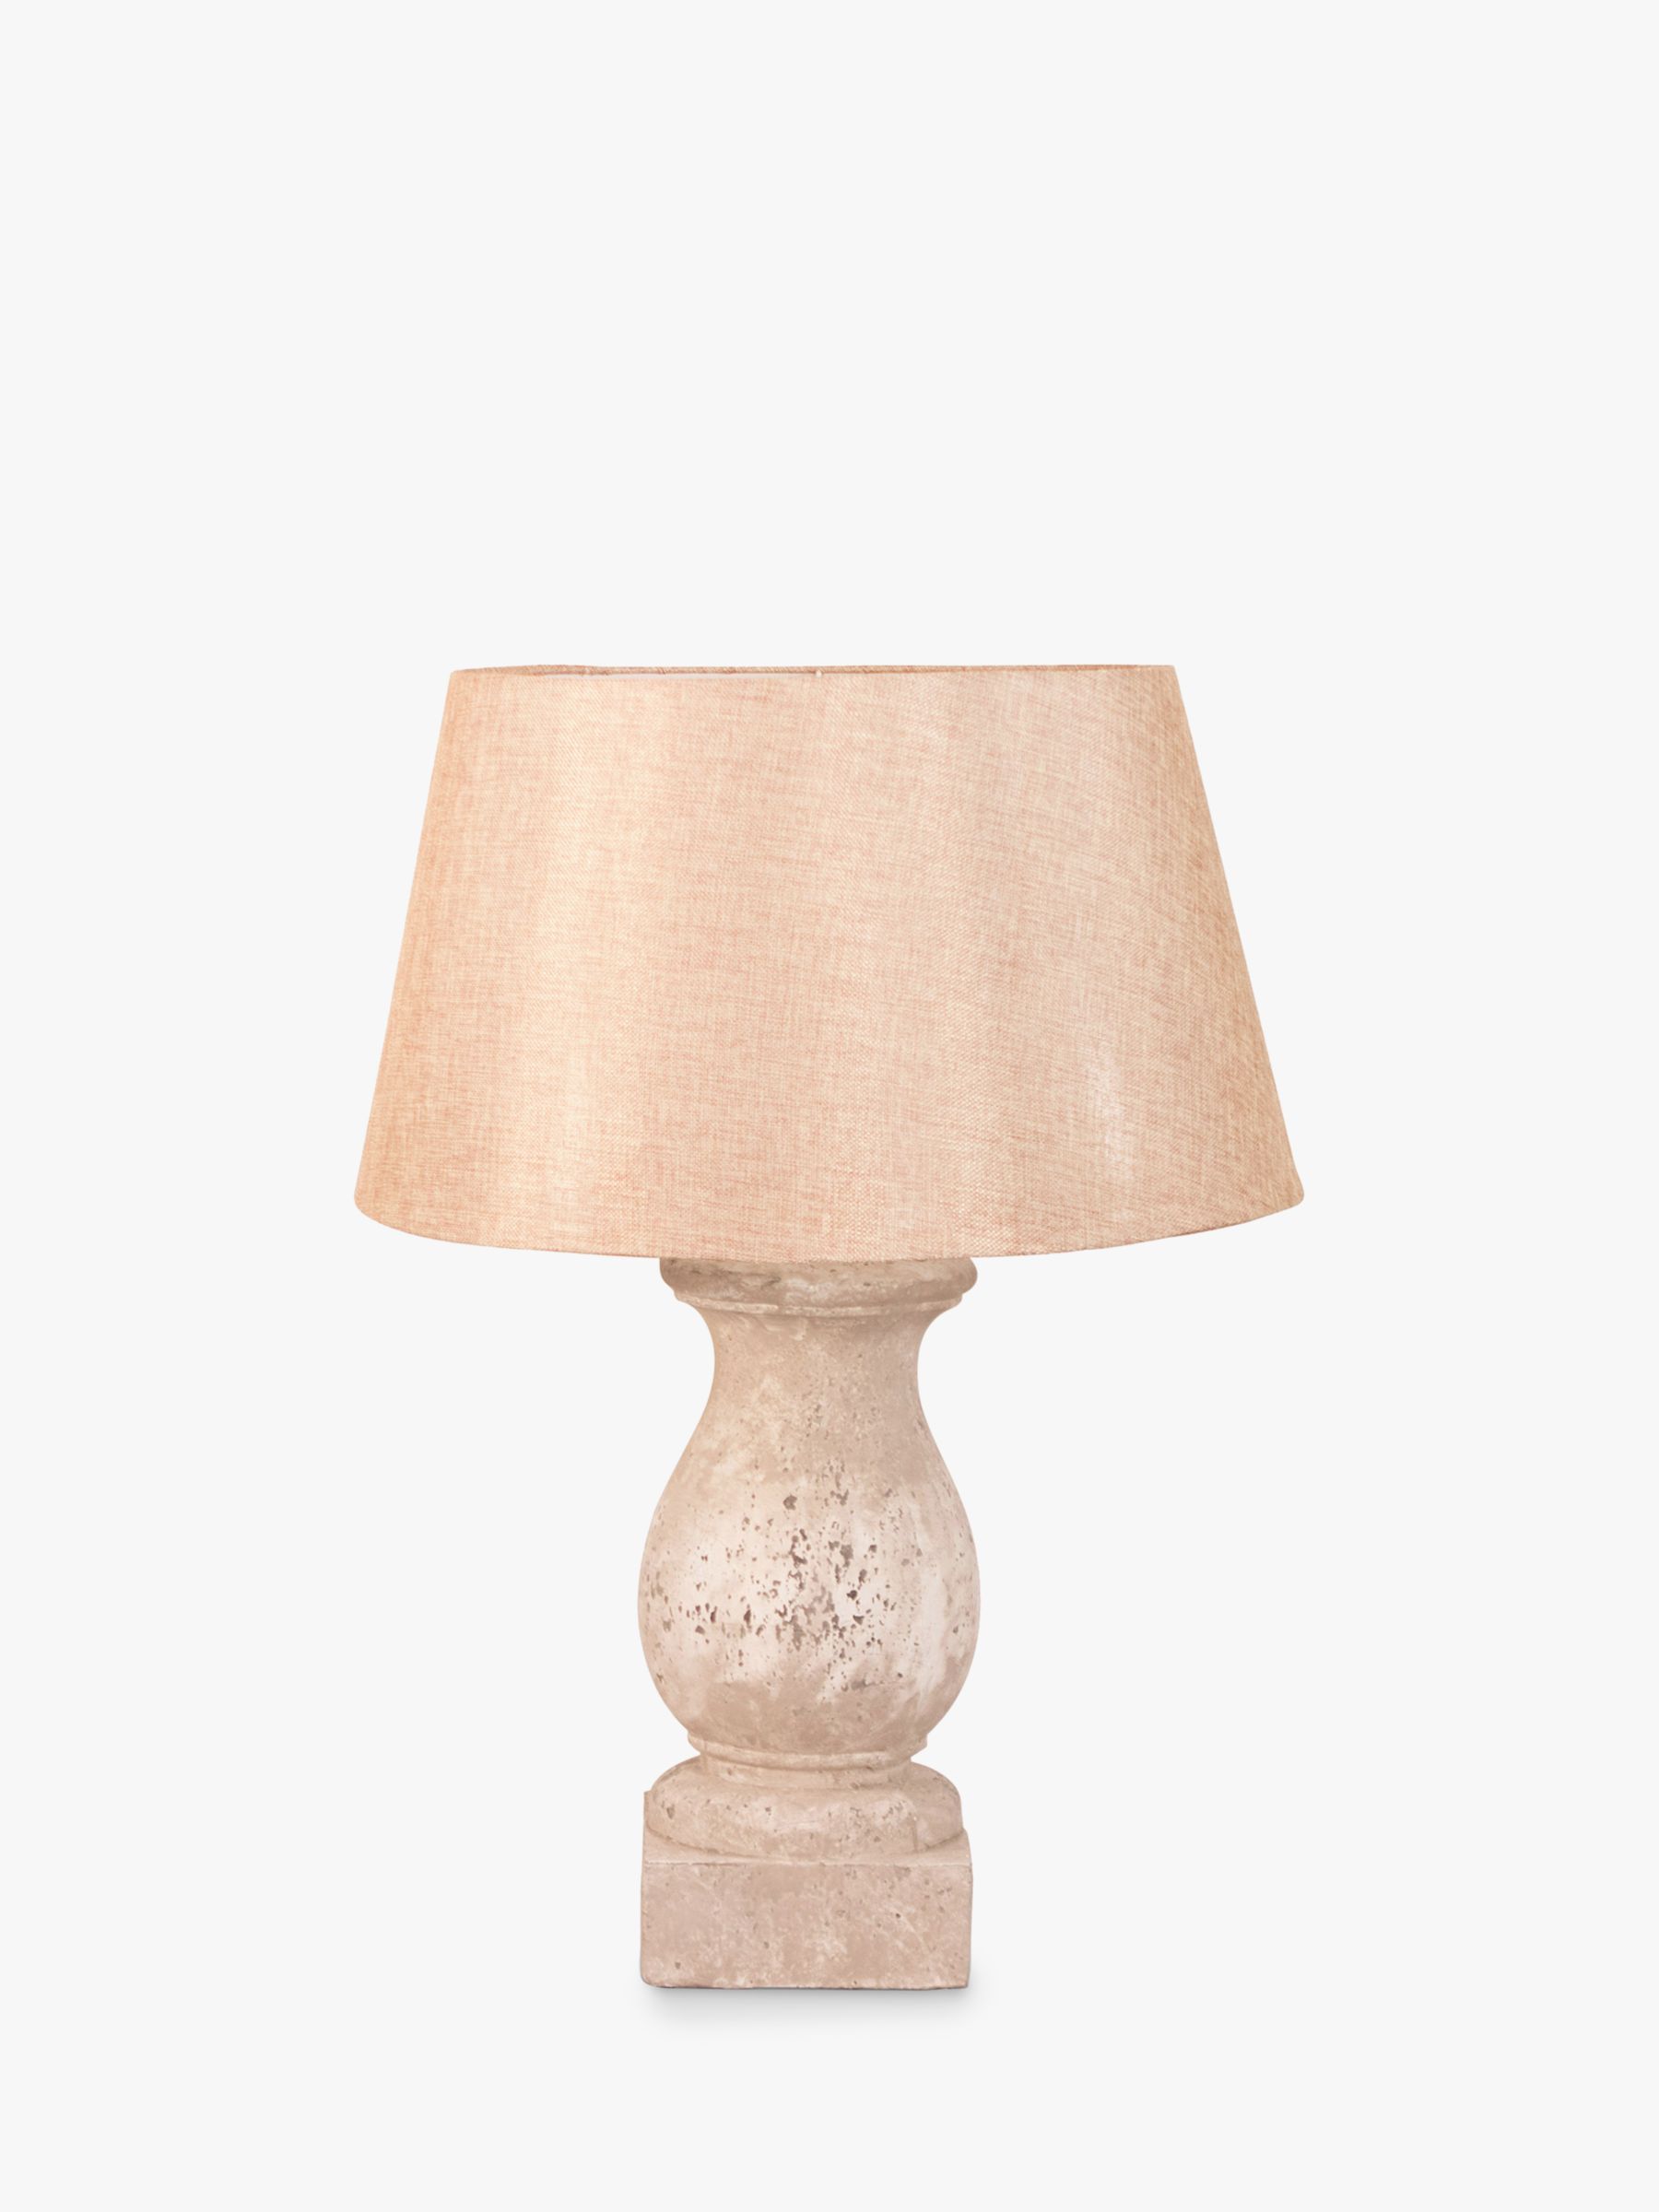 Photo of One.world birkdale column base linen shade table lamp stone